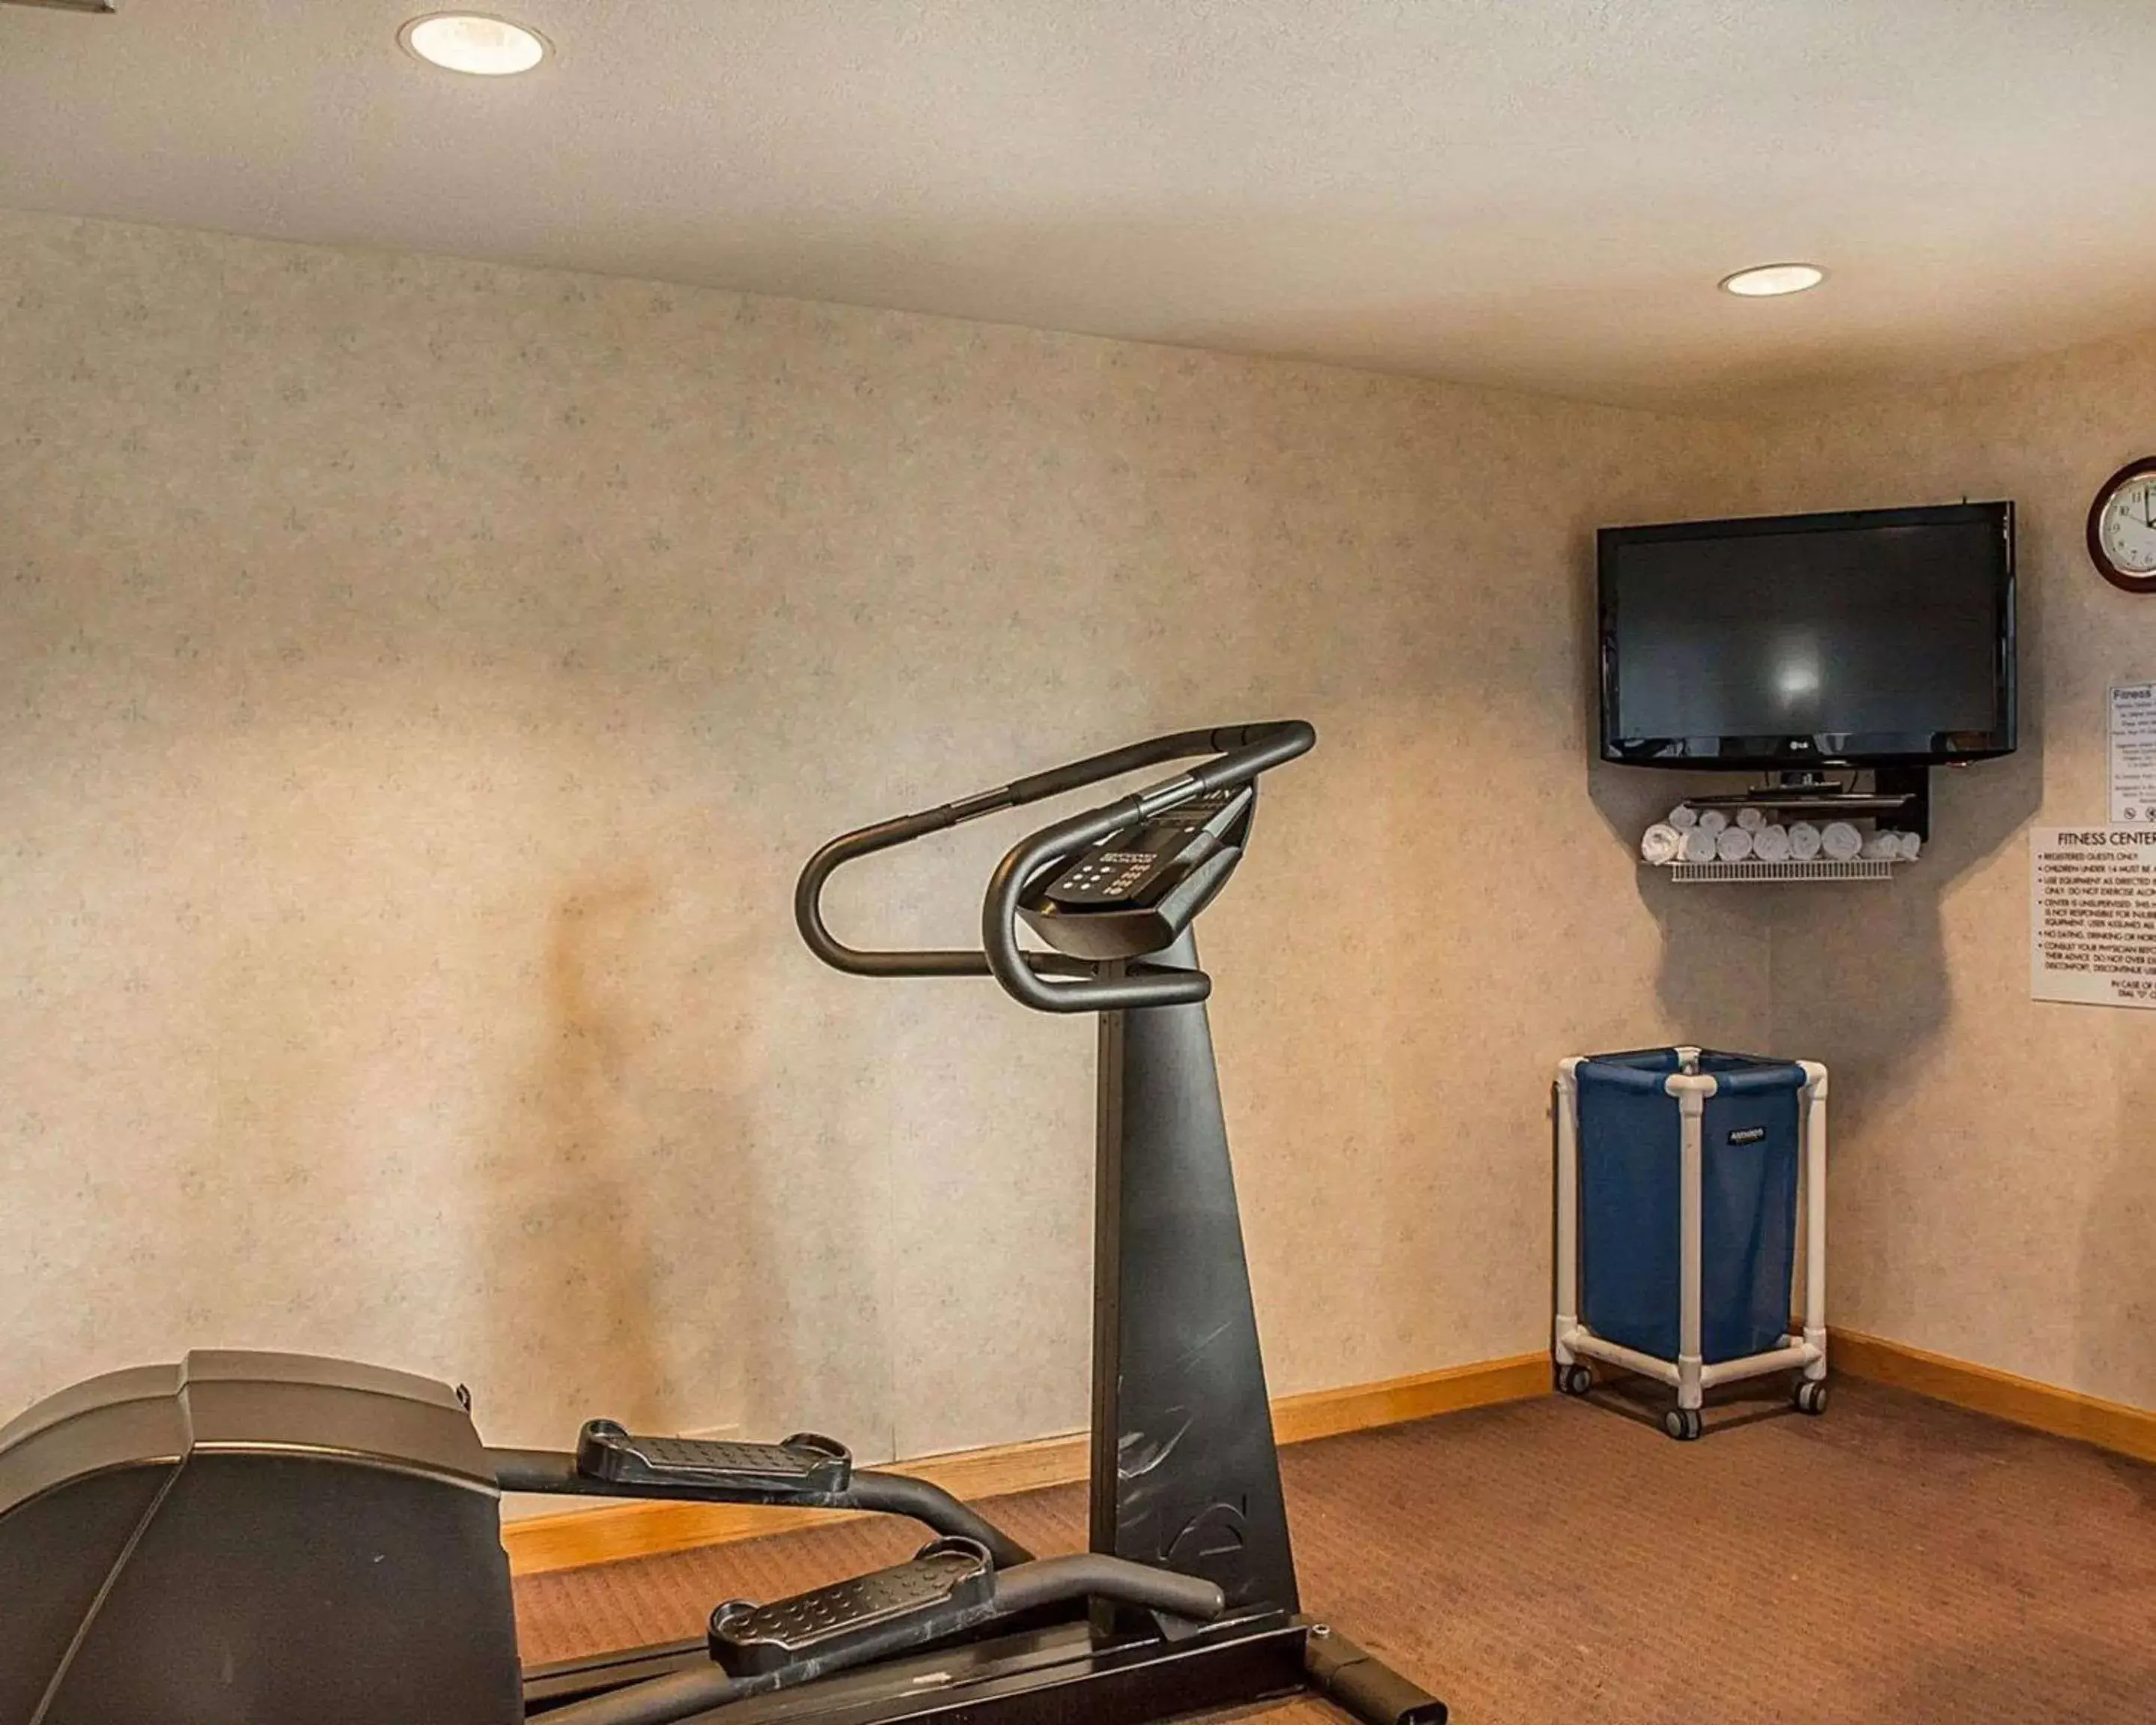 Fitness centre/facilities, Fitness Center/Facilities in Quality Inn & Suites Cincinnati I-275